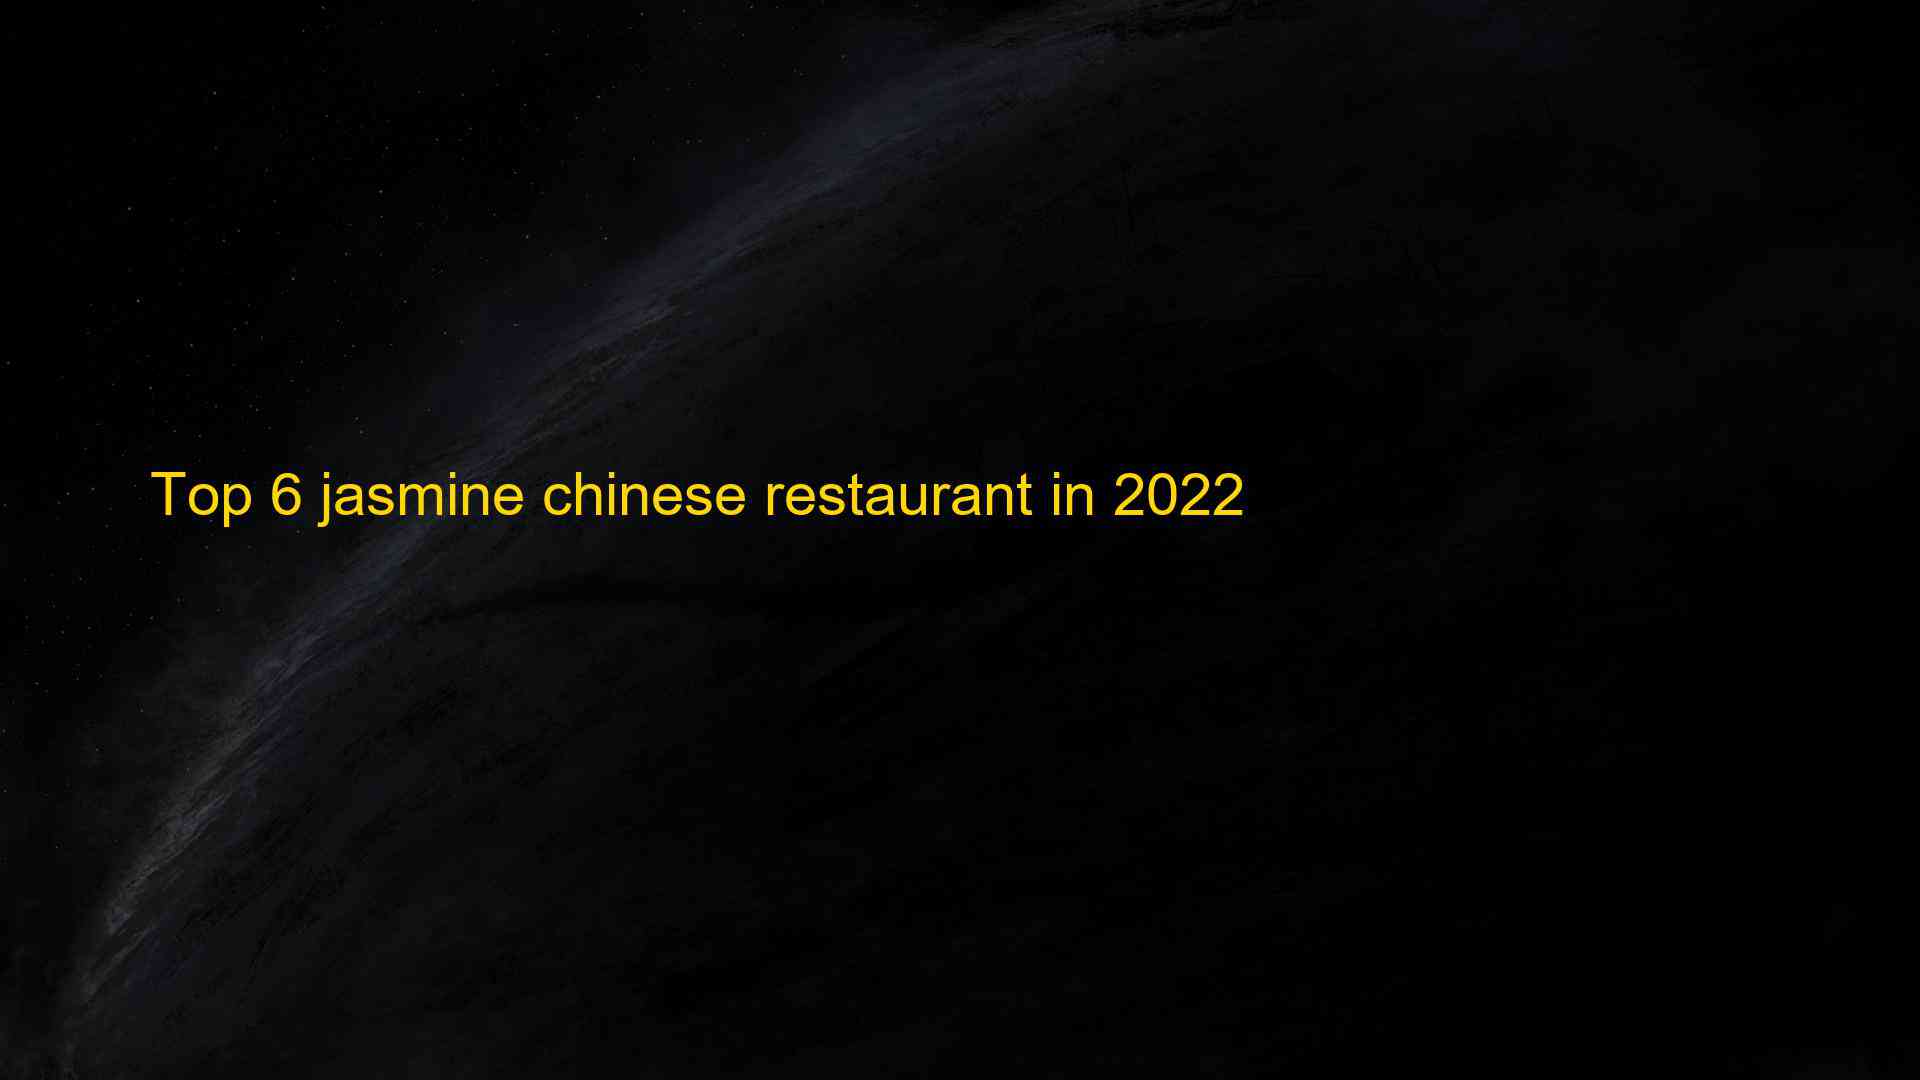 Top 6 jasmine chinese restaurant in 2022 1662834716